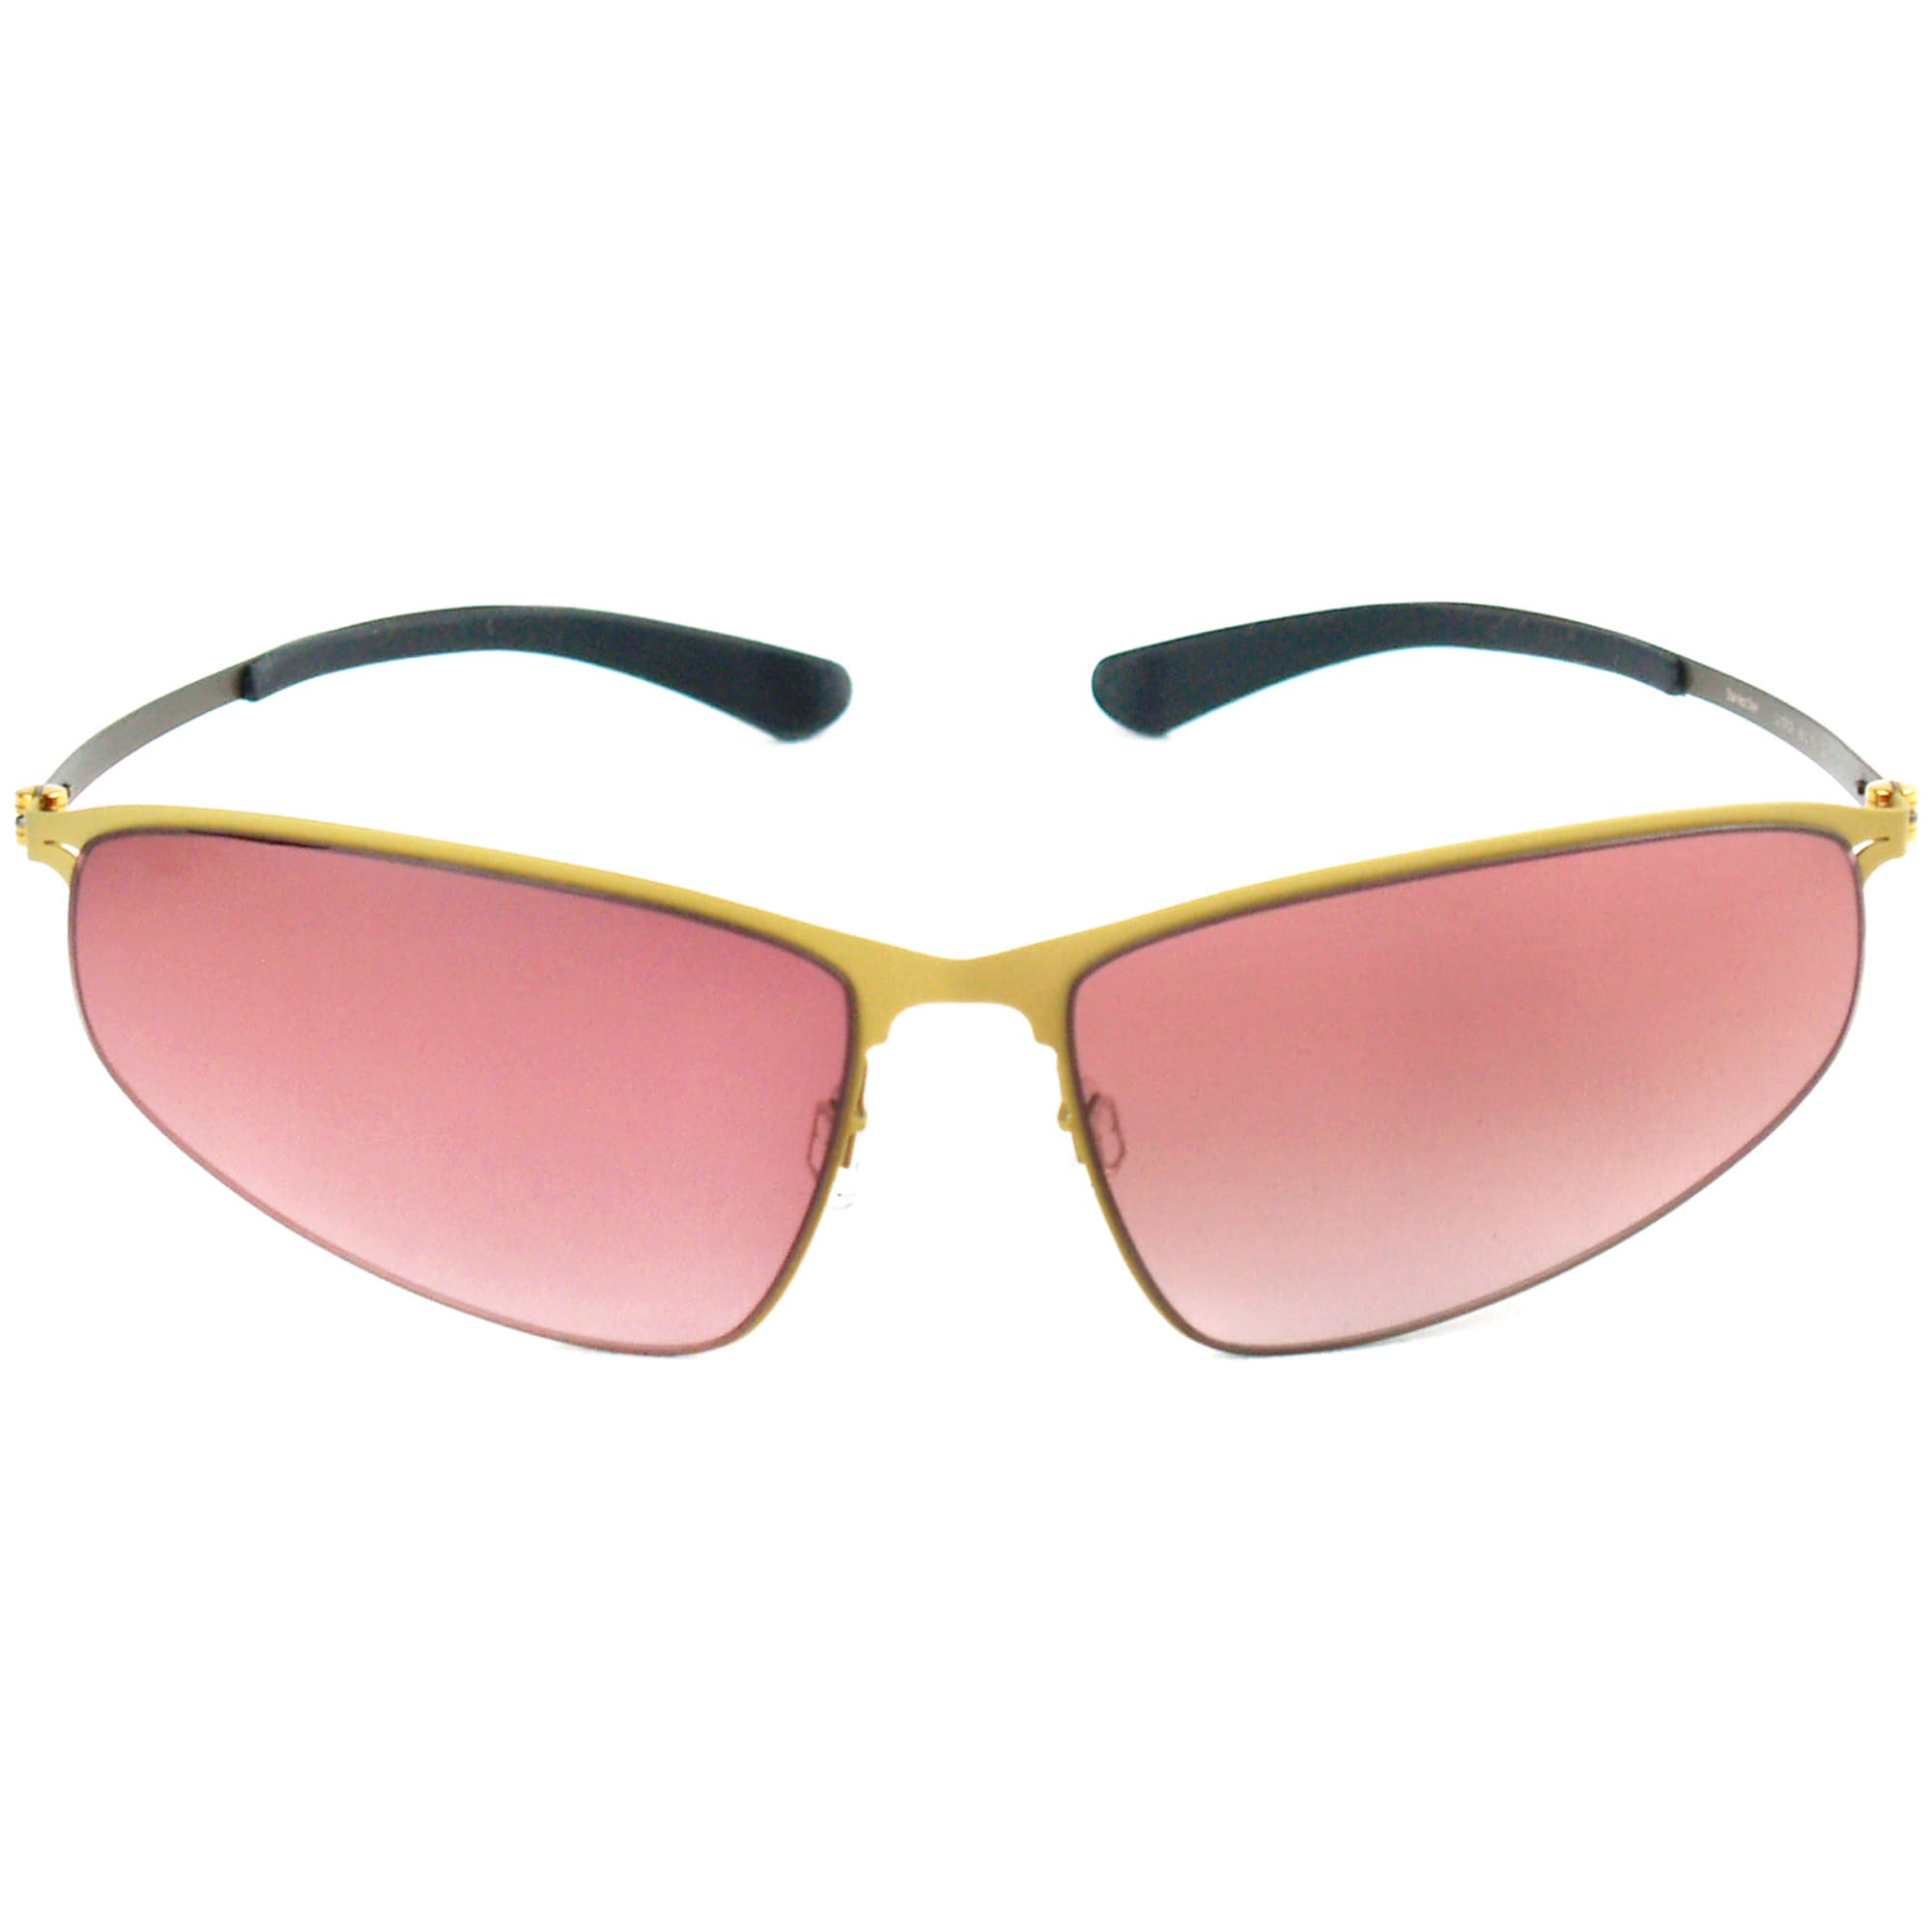 MatrixI Sport Design Thin Stainless Steel  Frame Sunglasses